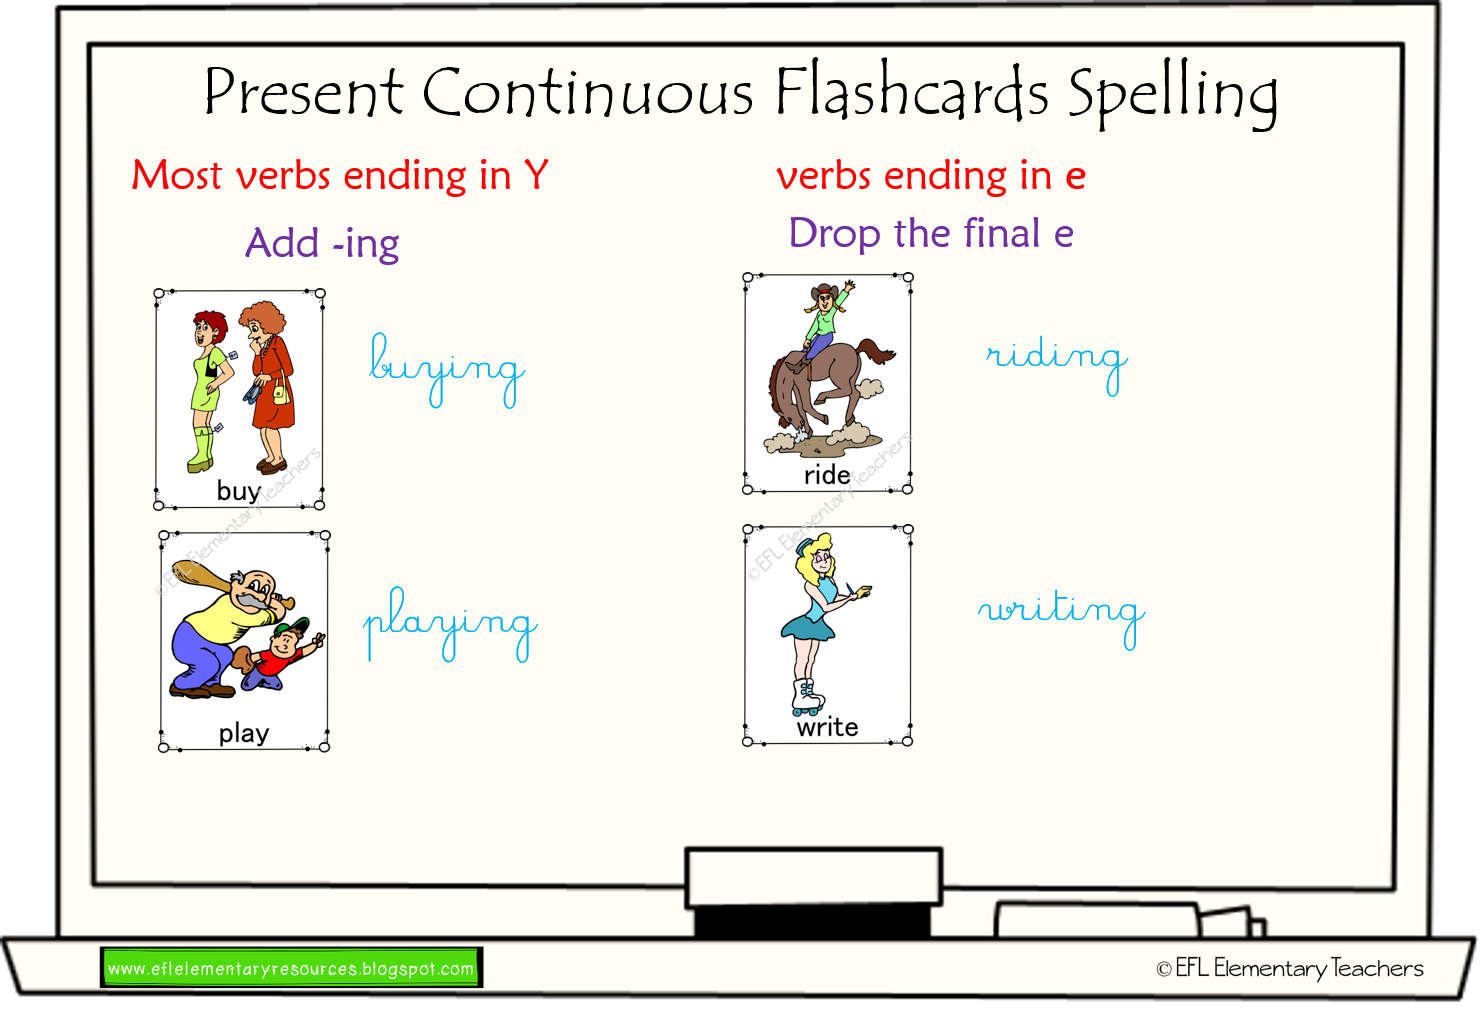 Present continuous spelling. Спеллинг в present Continuous. Презент континиус Flashcards. Present Continuous картинки. Flashcards for present Continuous.